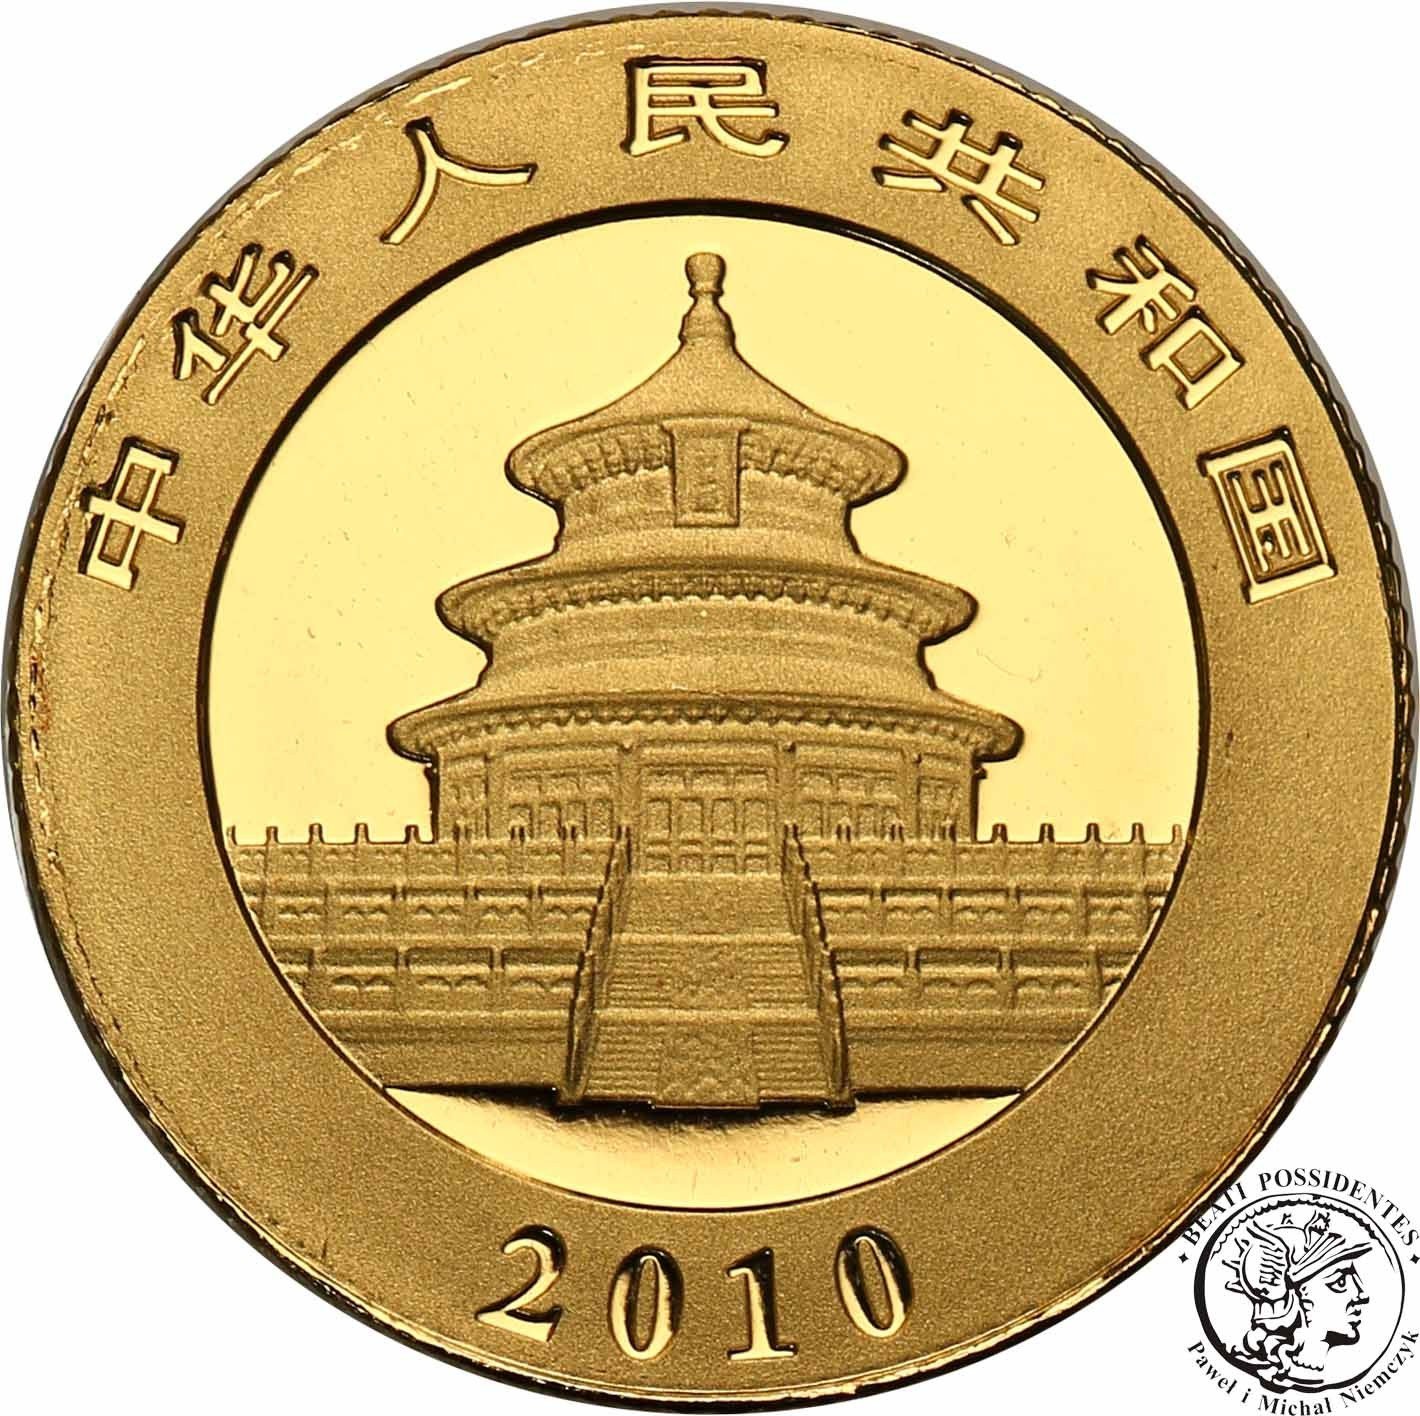 Chiny 50 Yuan 2010 Panda st.L 1/10 uncji złota